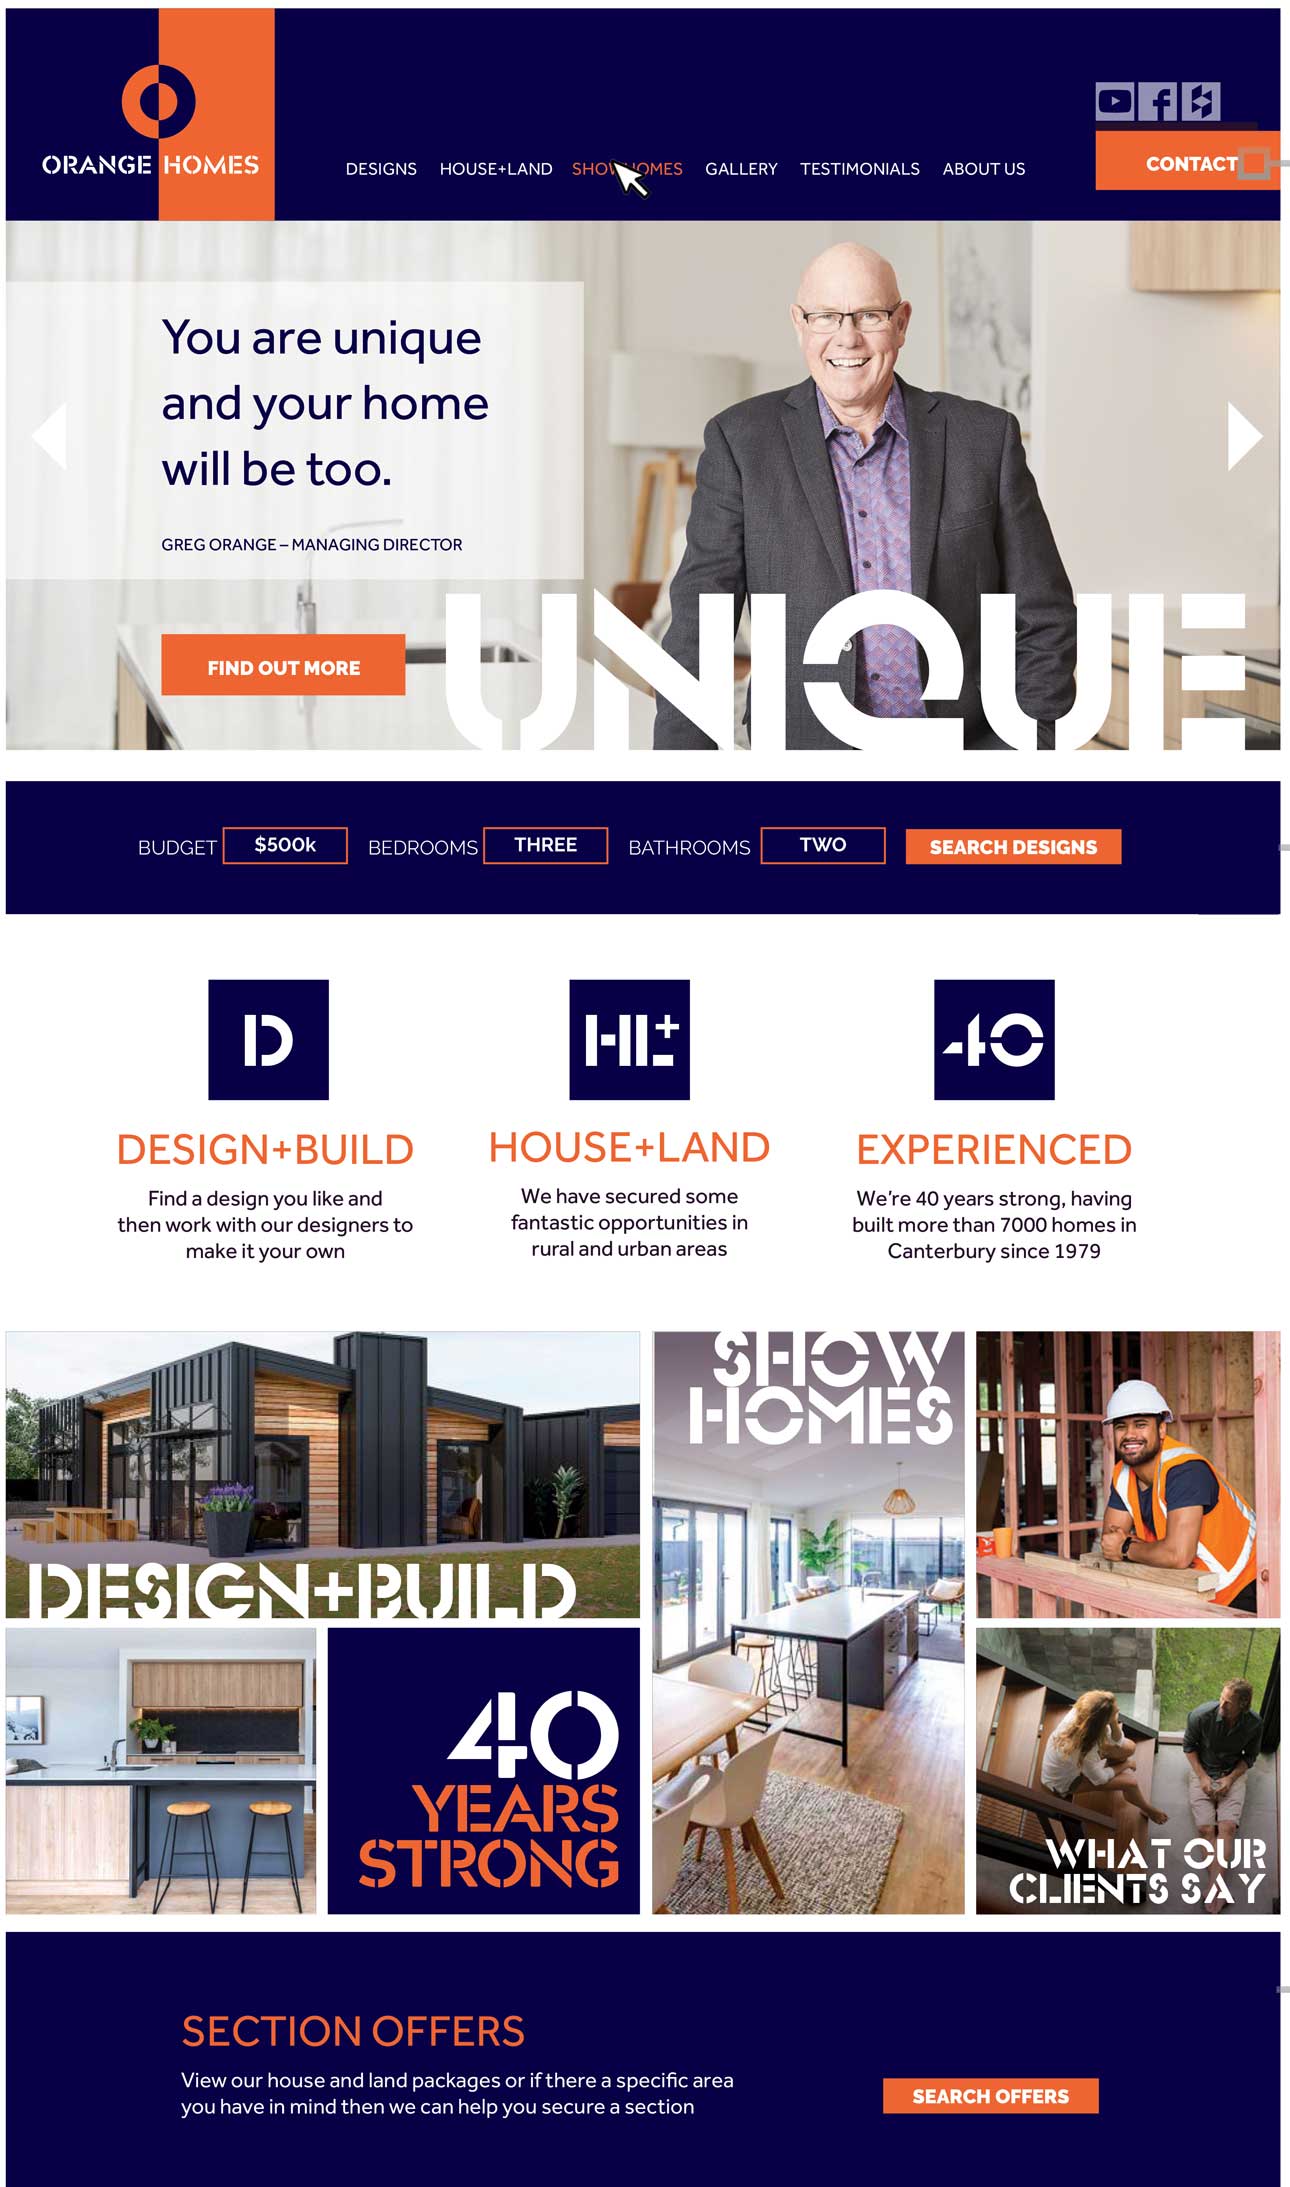 orange homes new website design